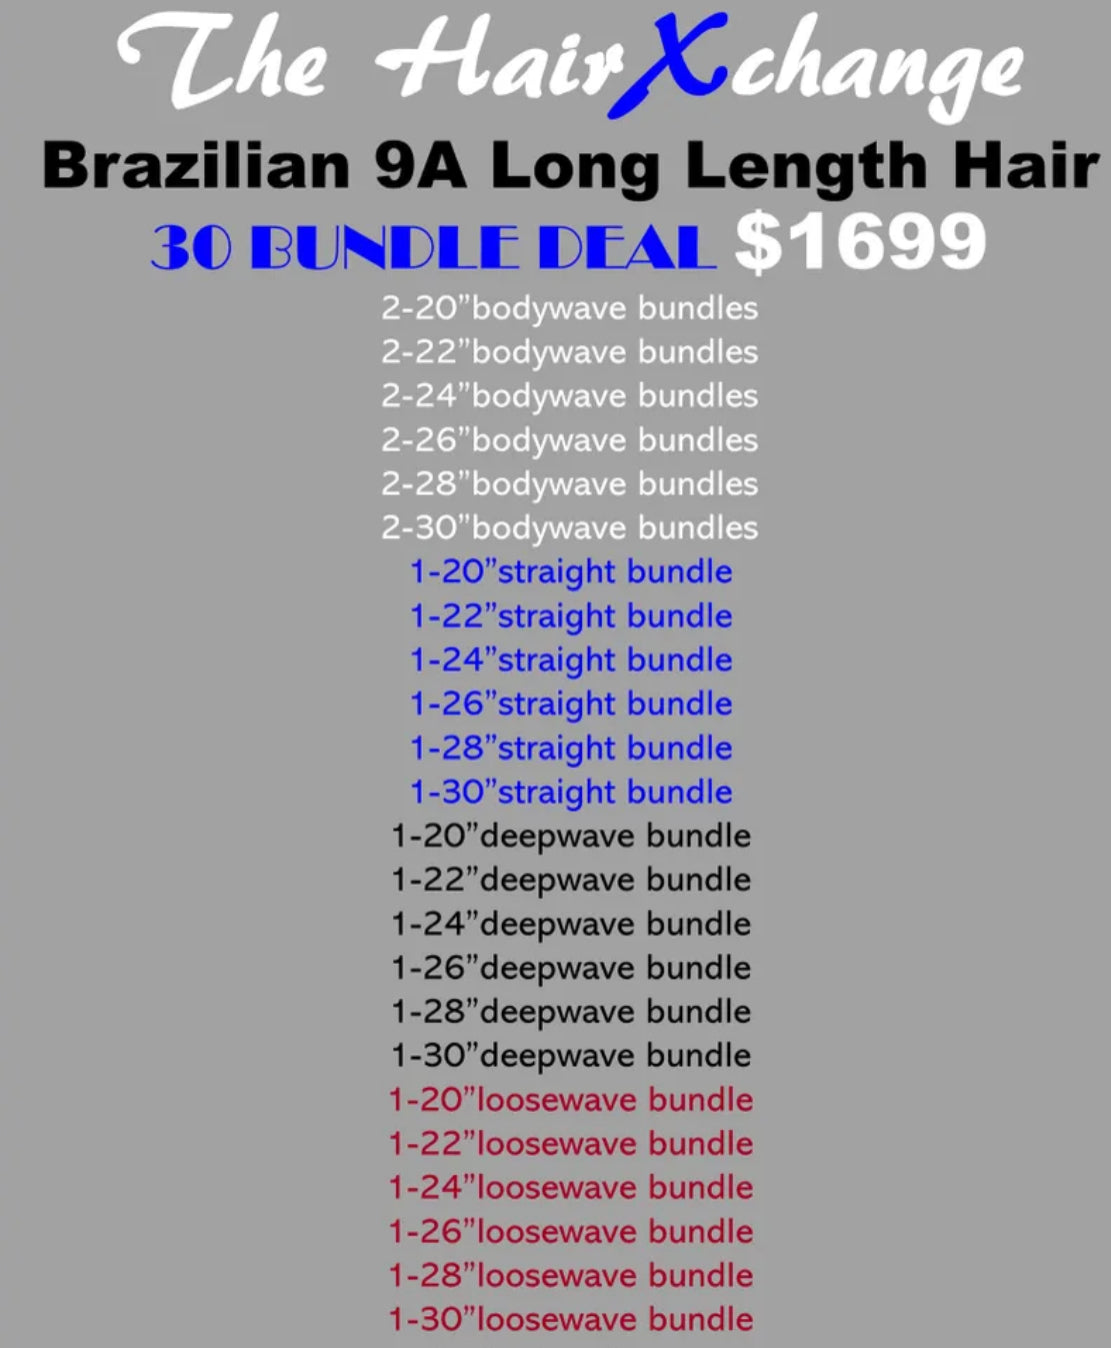 (30) Piece Brazilian Mixed Curl Bundle Deal